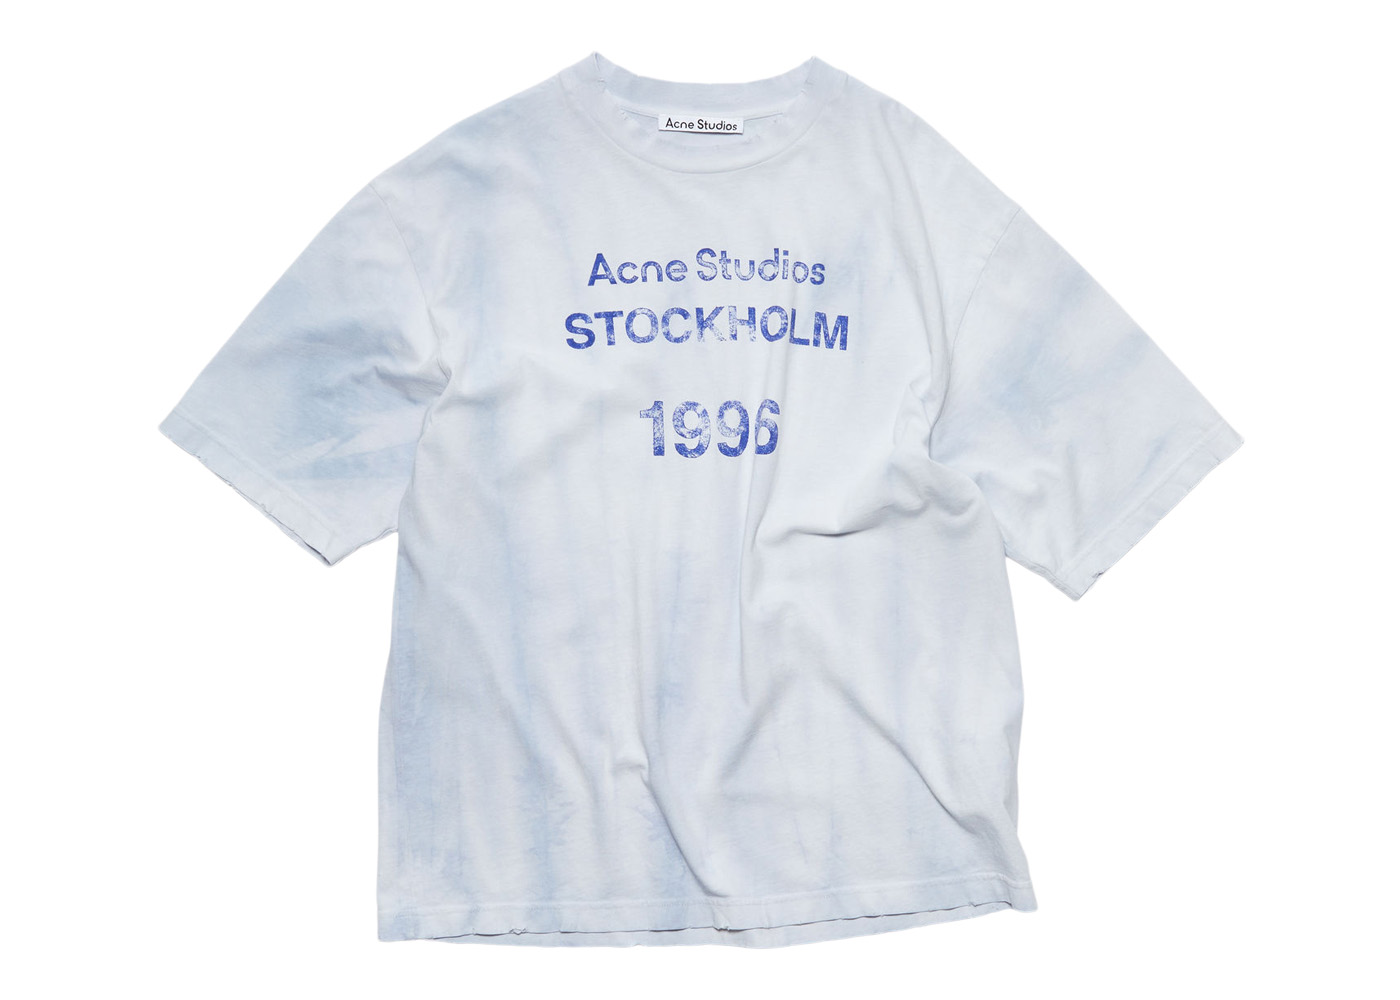 Acne Studios Stockholm 1996 Stamp T-shirt Pale Blue Men's - US